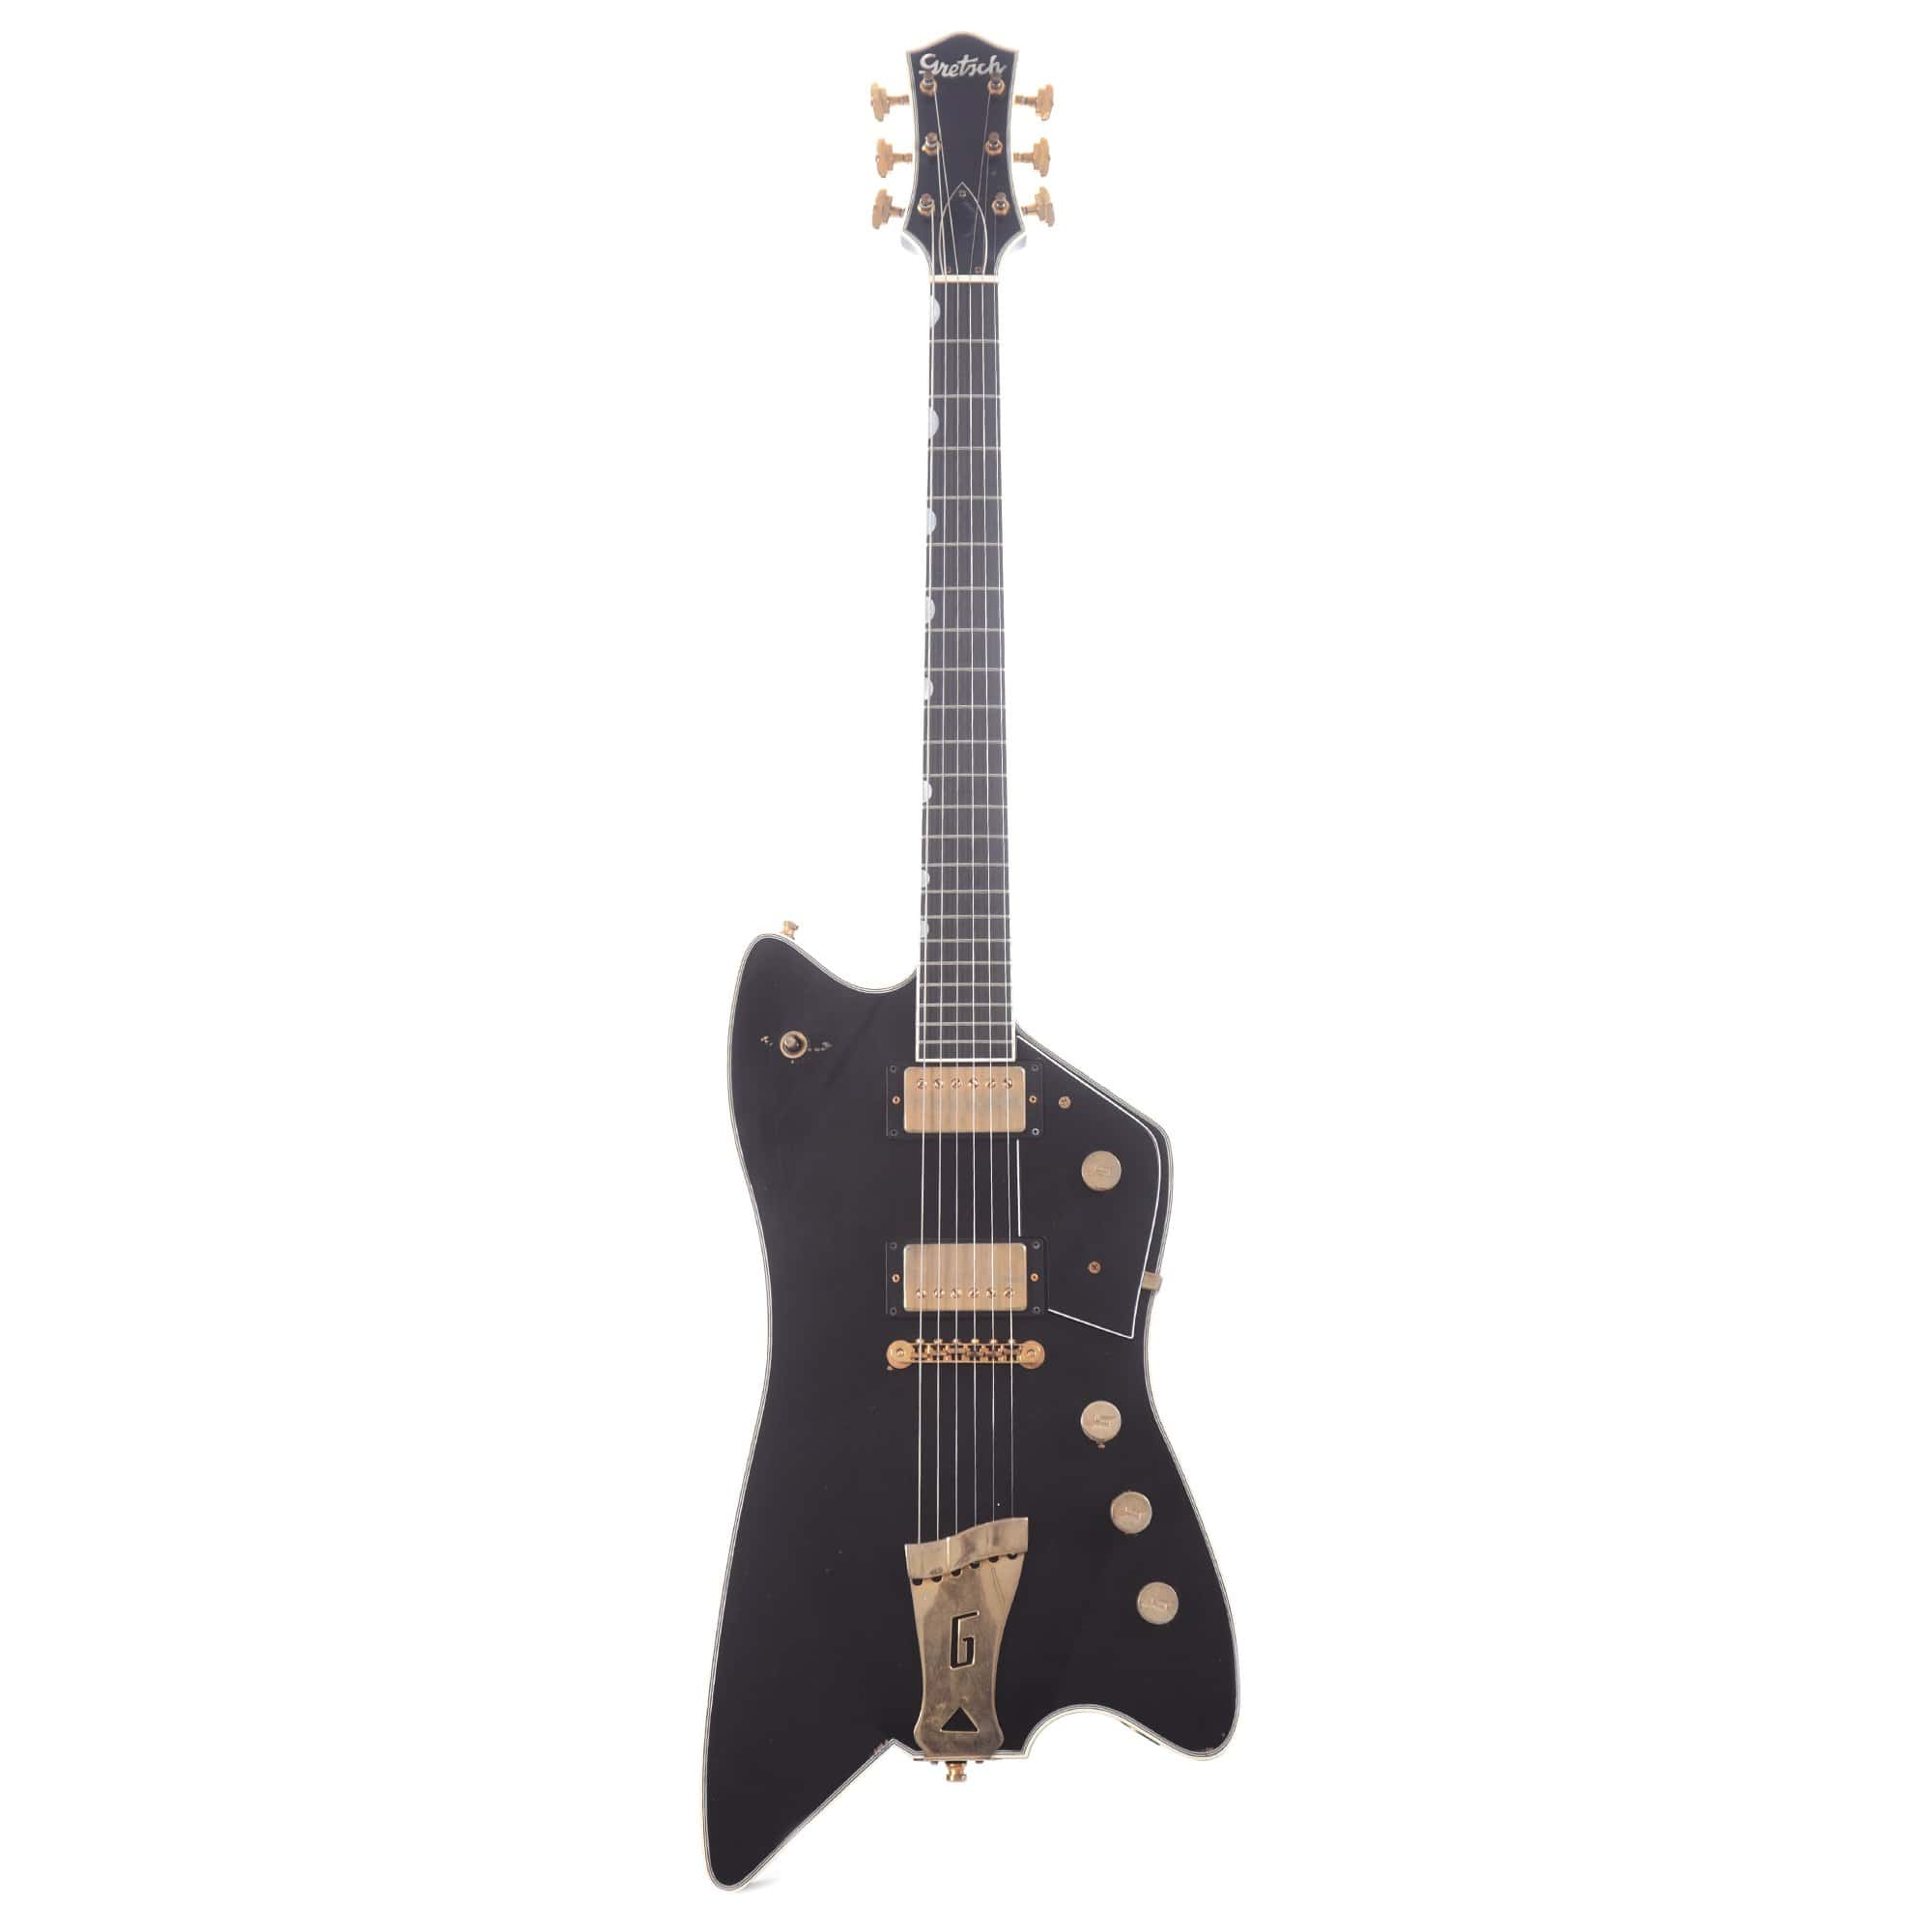 Gretsch Custom Shop Ebony Caddy Bo Relic w/Ebony Fingerboard & ThroBak SLE-101 Pickups Masterbuilt by Stephen Stern Electric Guitars / Solid Body